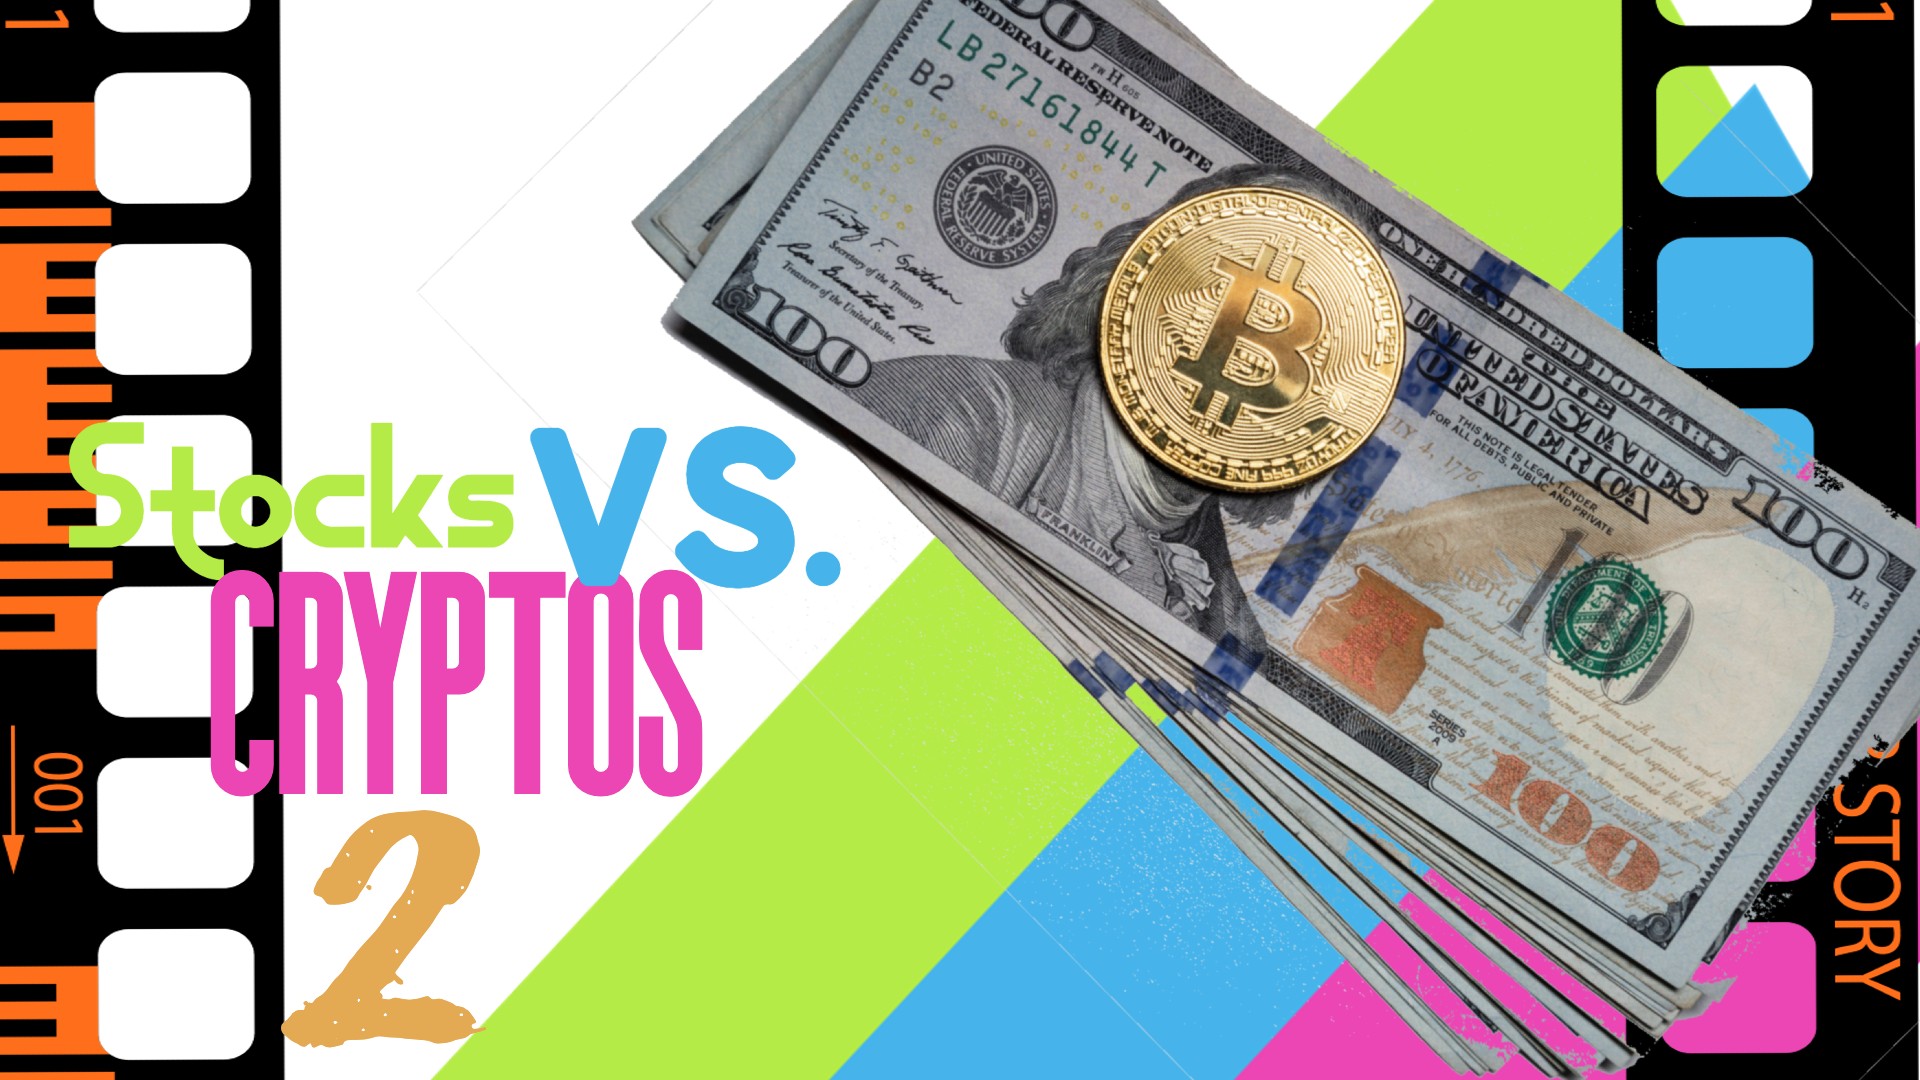 Stocks vs. Cryptos 2: Battle of the Beaten Down Assets